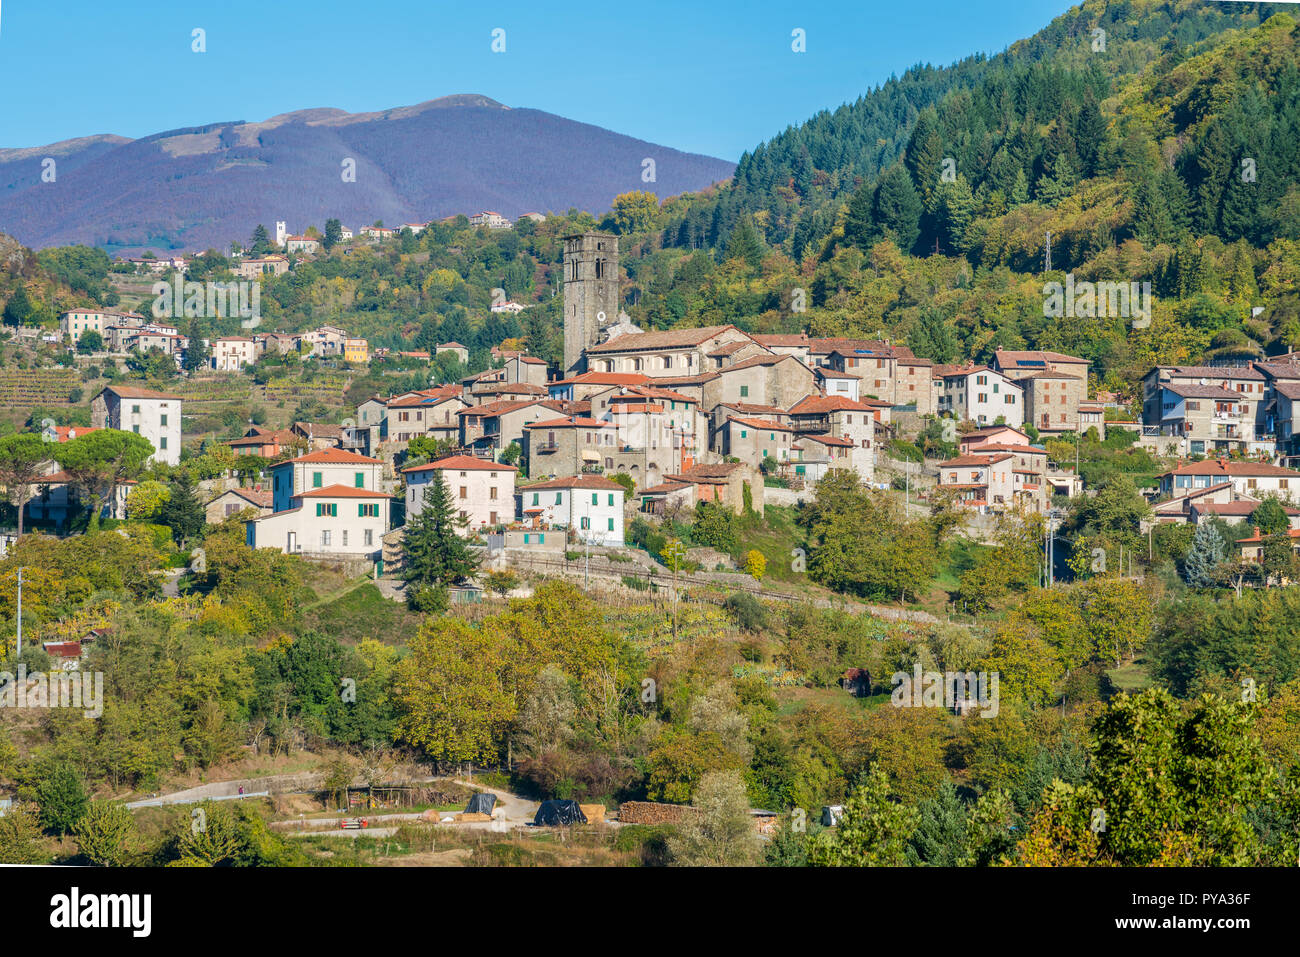 San Romano in Garfagnana, in Den Appenino Tosco Emiliano National Park. Provinz Lucca, Toskana, Italien. Stockfoto